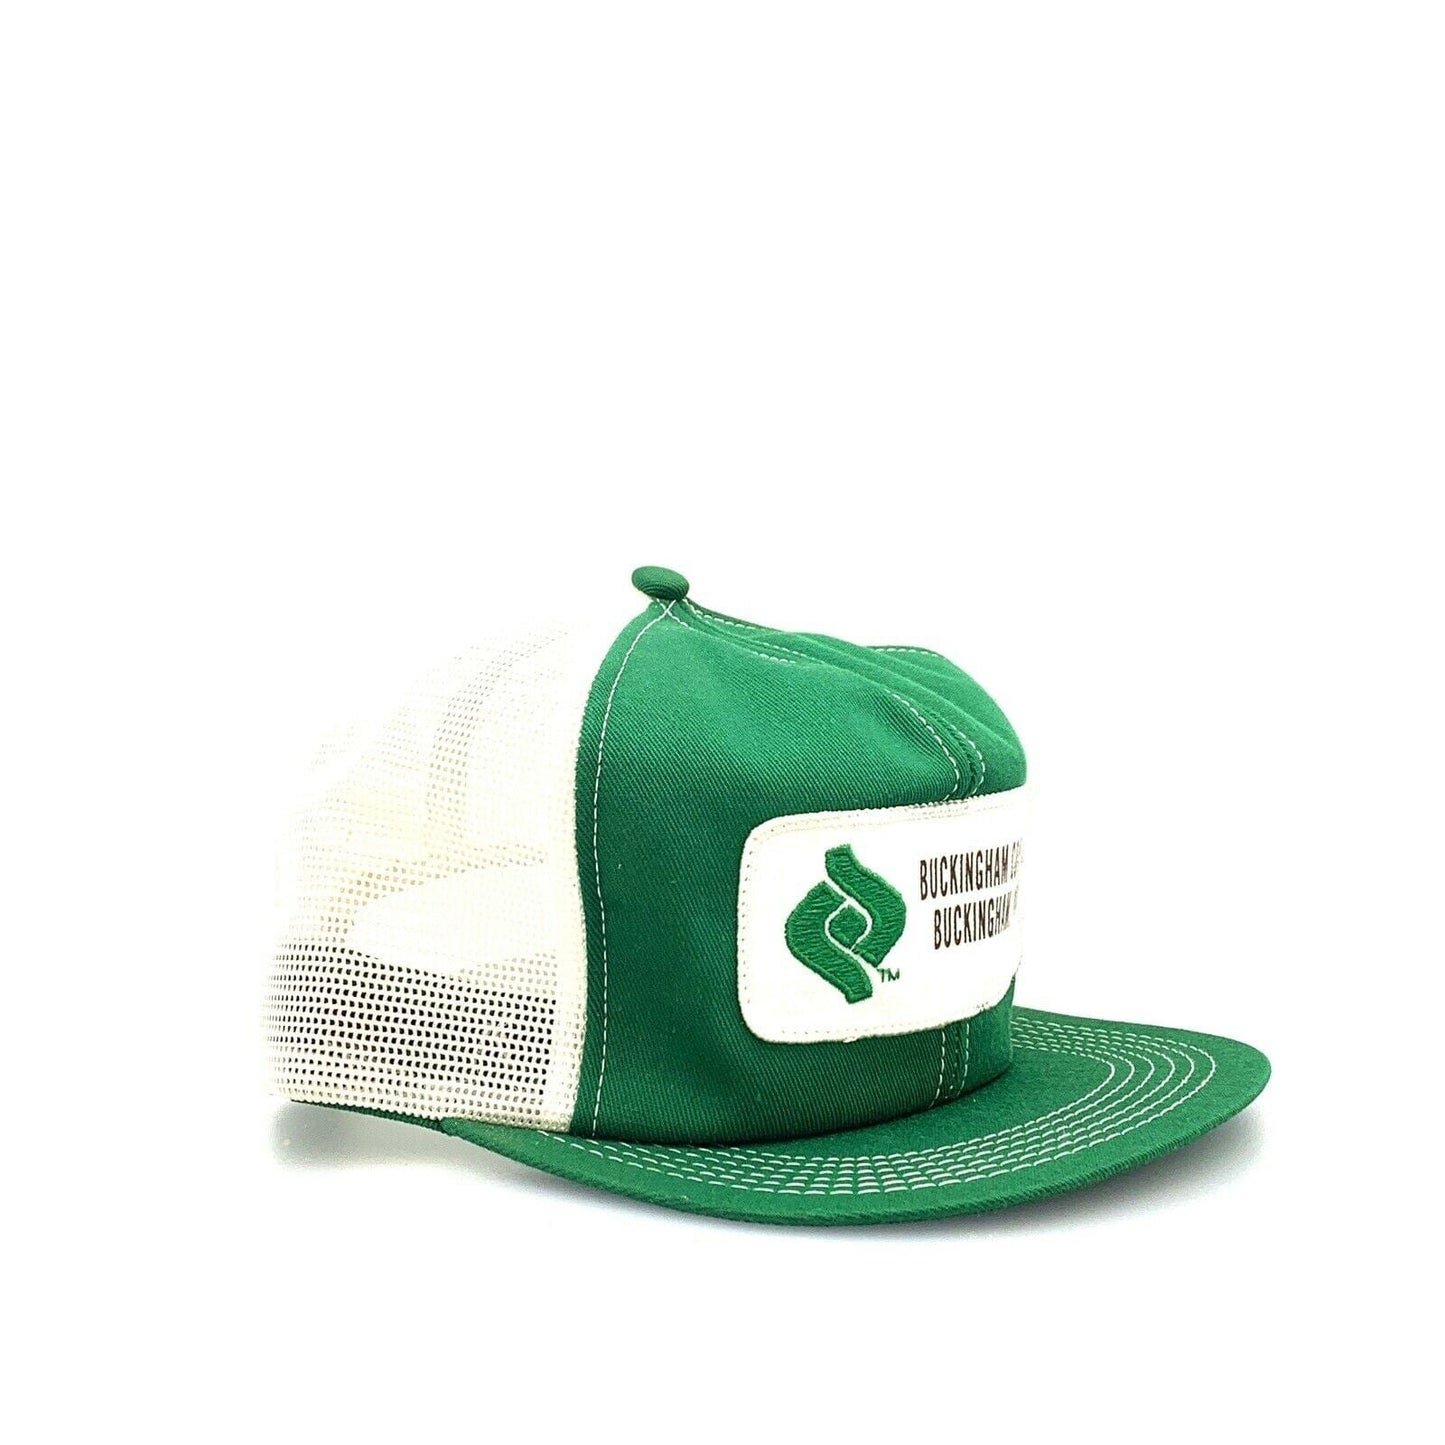 VTG BUCKINGHAM COOP CO BUCKINGHAM IOWA SnapBack Trucker Hat, Green - Adjustable - parsimonyshoppes